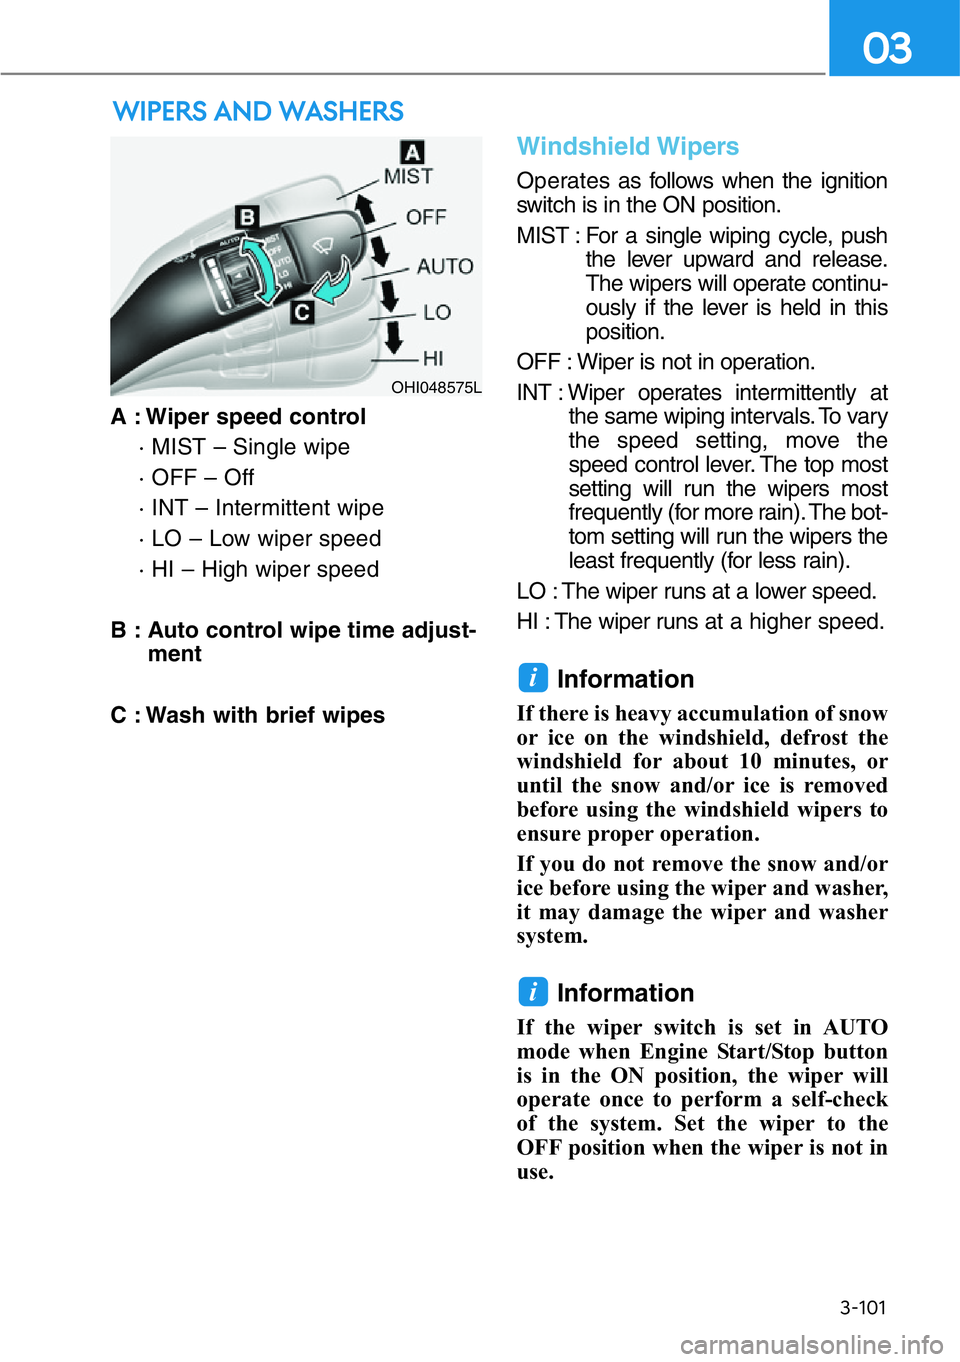 HYUNDAI GENESIS G90 2016  Owners Manual 3-101
03
A : Wiper speed control
· MIST – Single wipe
· OFF – Off
· INT – Intermittent wipe
· LO – Low wiper speed
· HI – High wiper speed
B : Auto control wipe time adjust-
ment
C : Wa